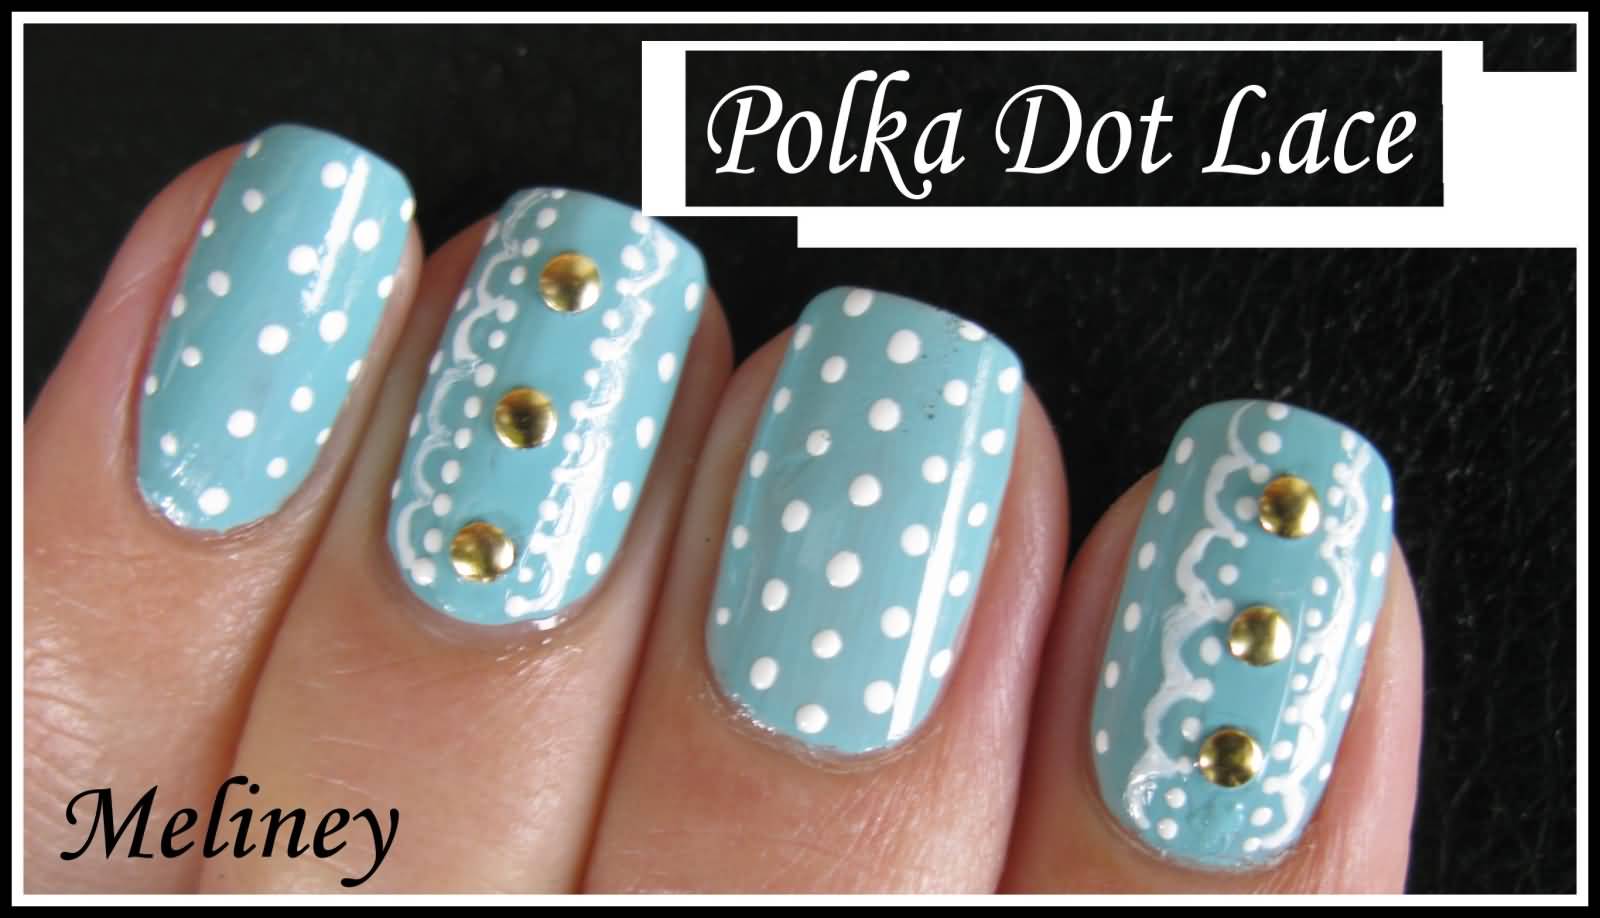 Polka Dot Lace Nail Art Design